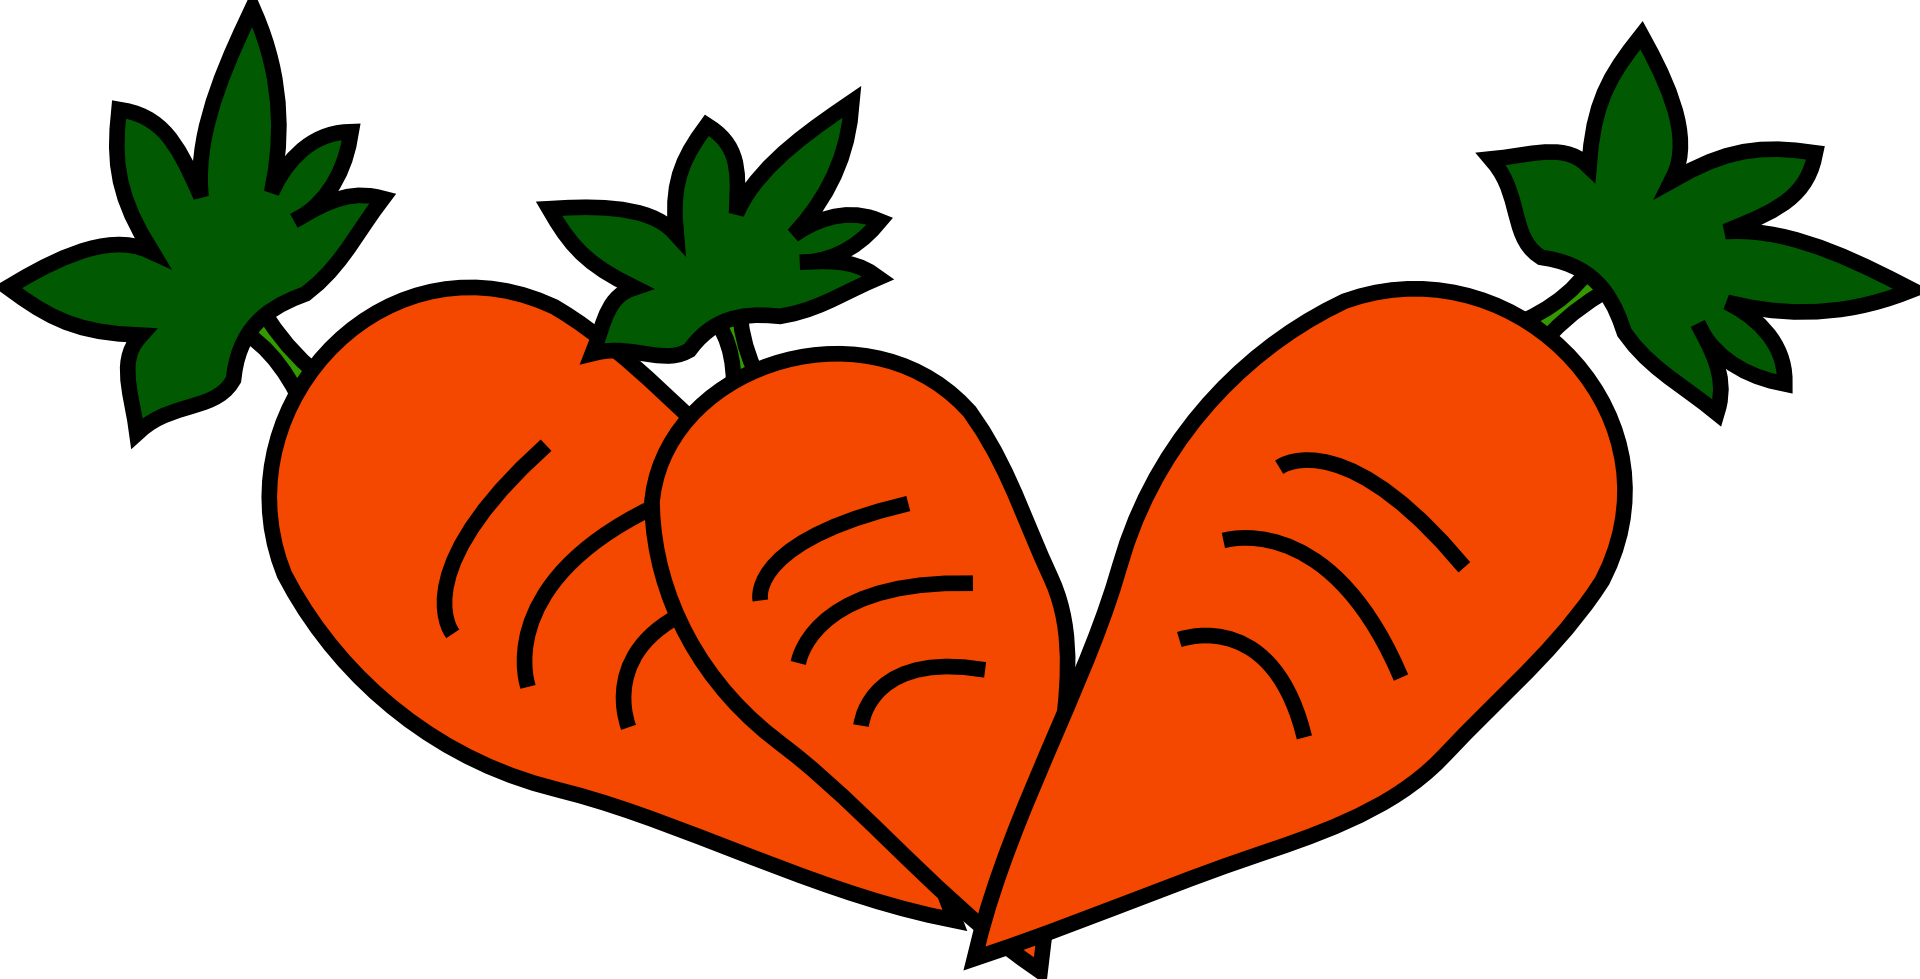 Морковка картинка для детей. Морковь для детей. Морковка рисунок для детей. Морковь картинка для детей на прозрачном фоне. Как по английски морковь